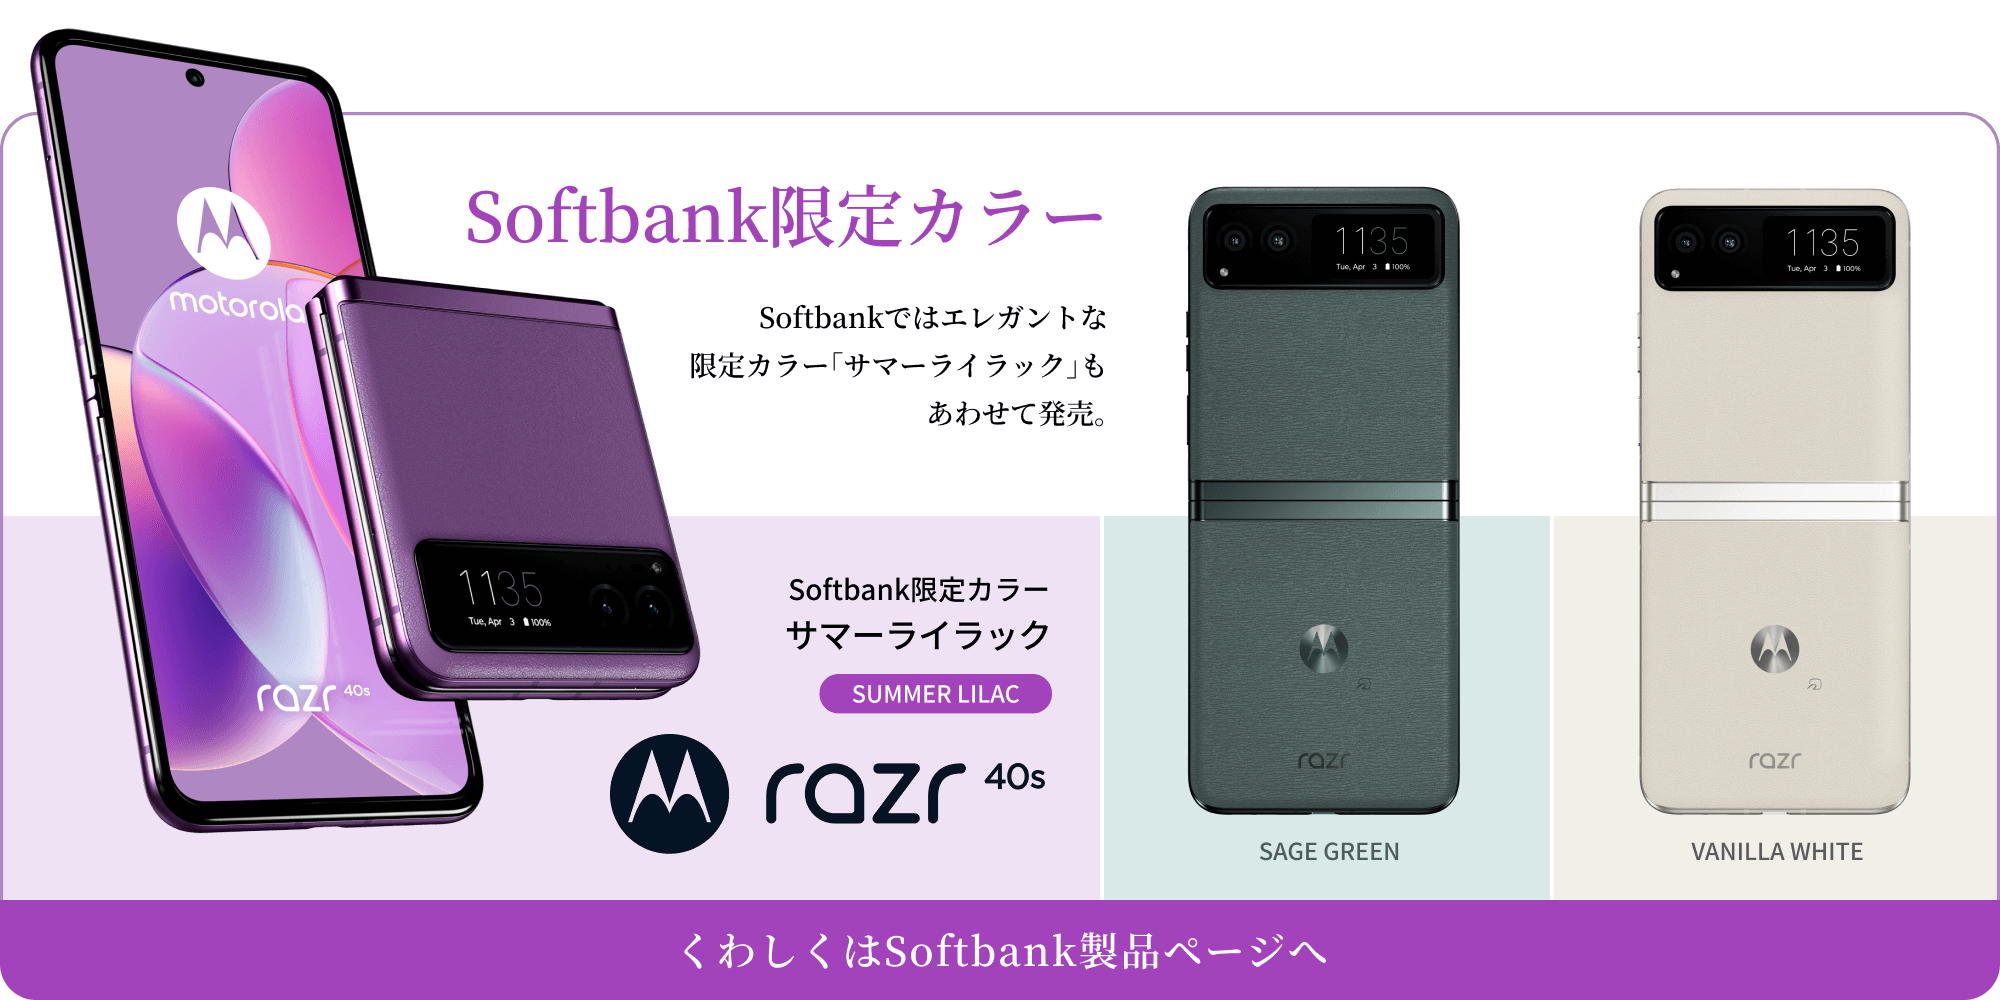 Softbank限定カラー Softbankではエレガントな限定カラー「サマーライラック」もあわせて発売。くわしくはSoftbank製品ページへ